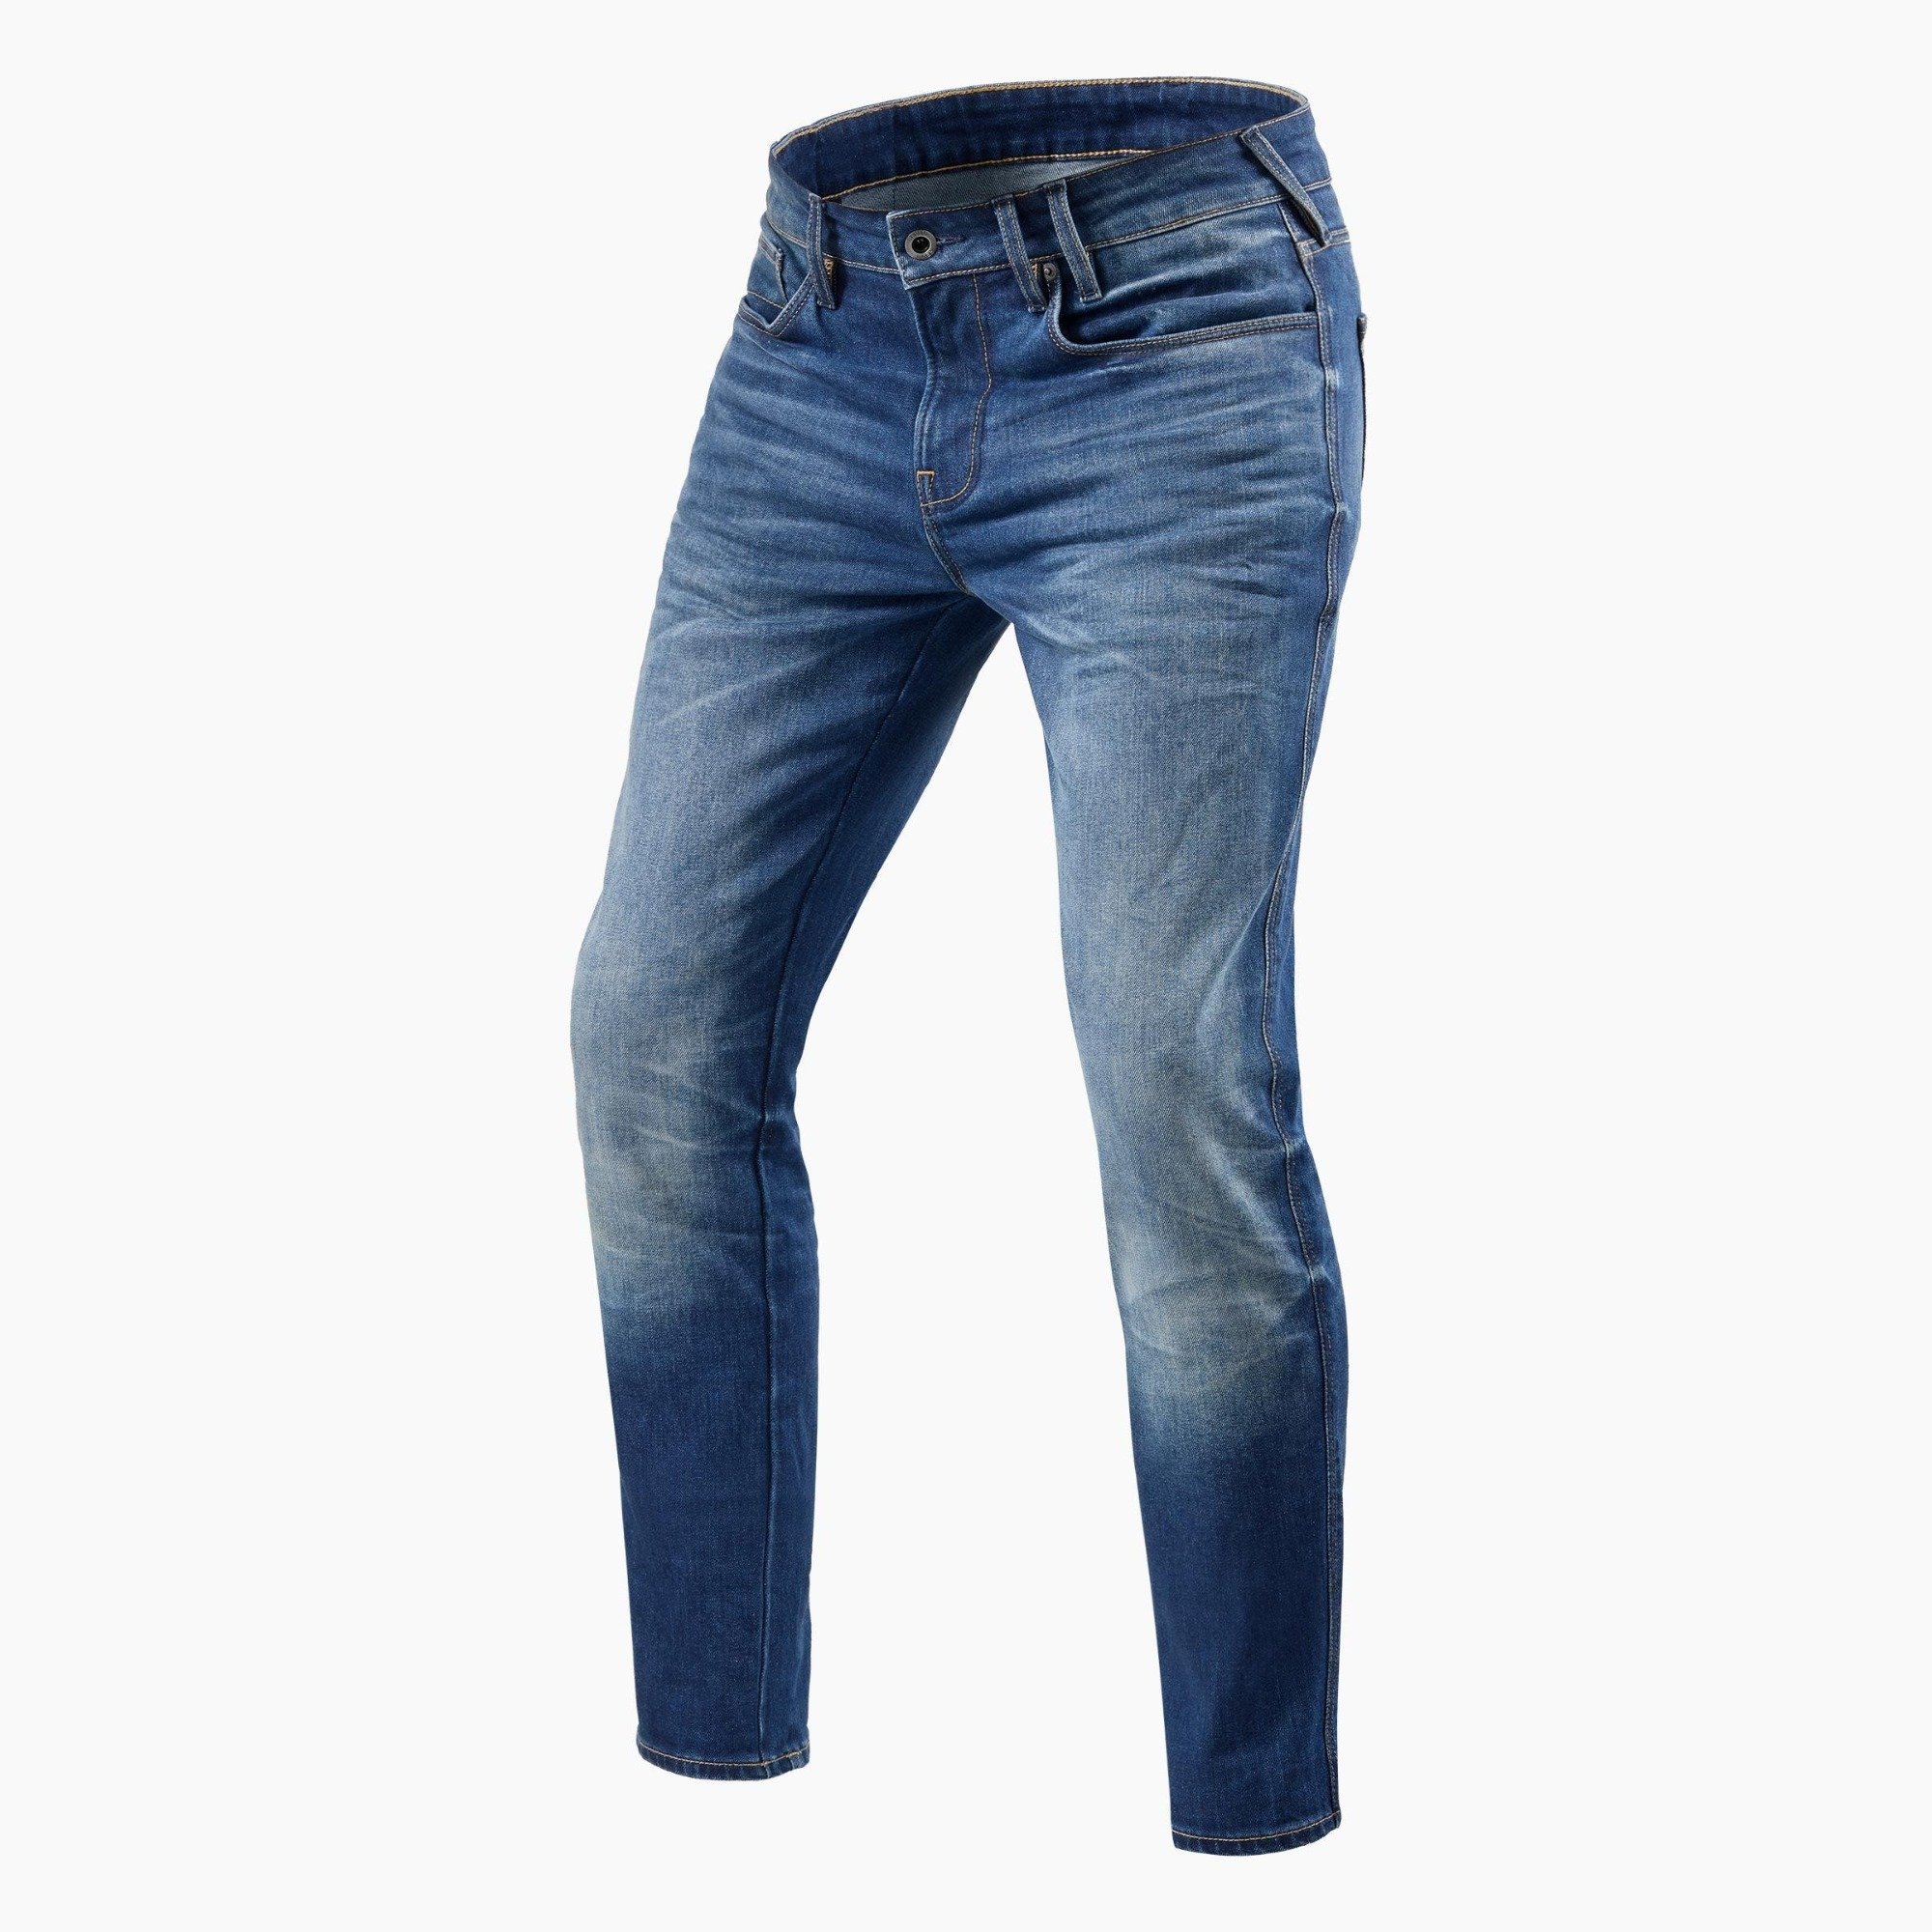 Image of REV'IT! Jeans Carlin SK Mid Blue Used Motorcycle Jeans Size L34/W28 EN